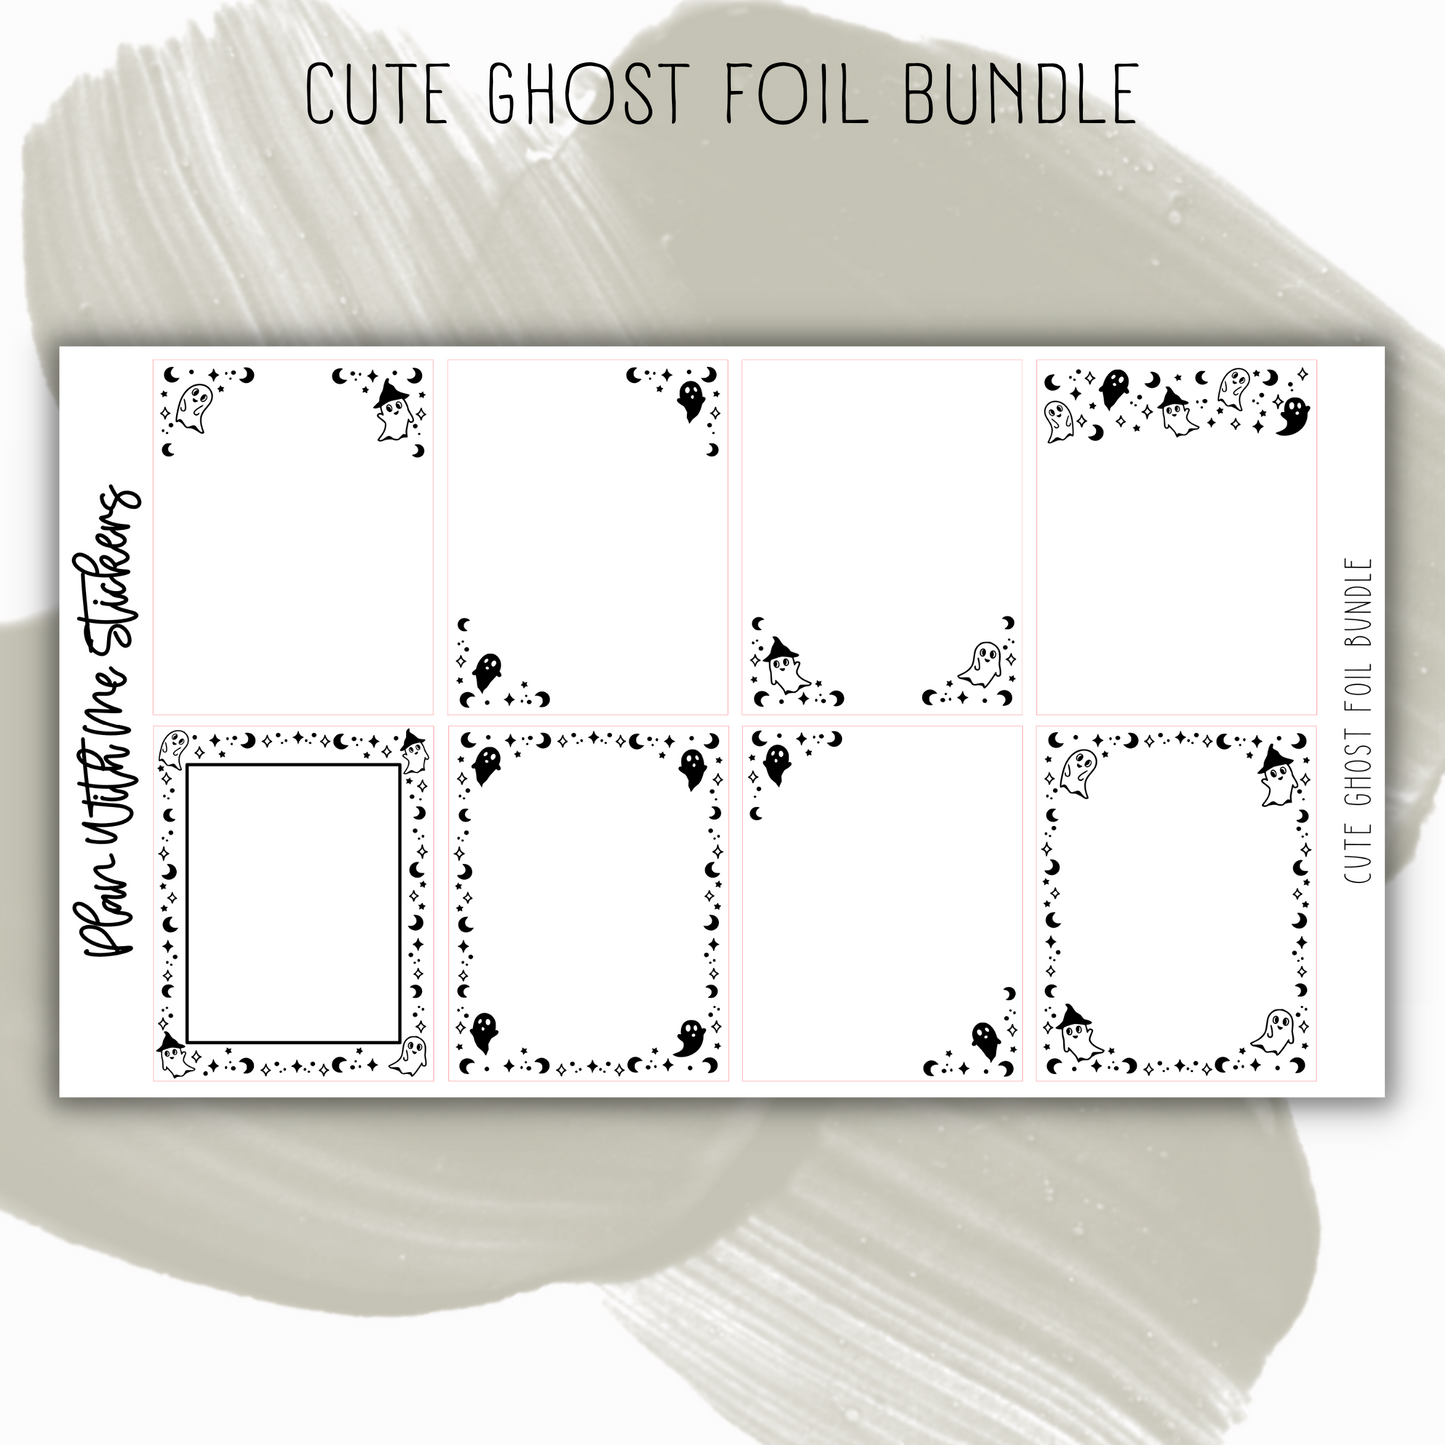 Cute Ghost Foil Bundle